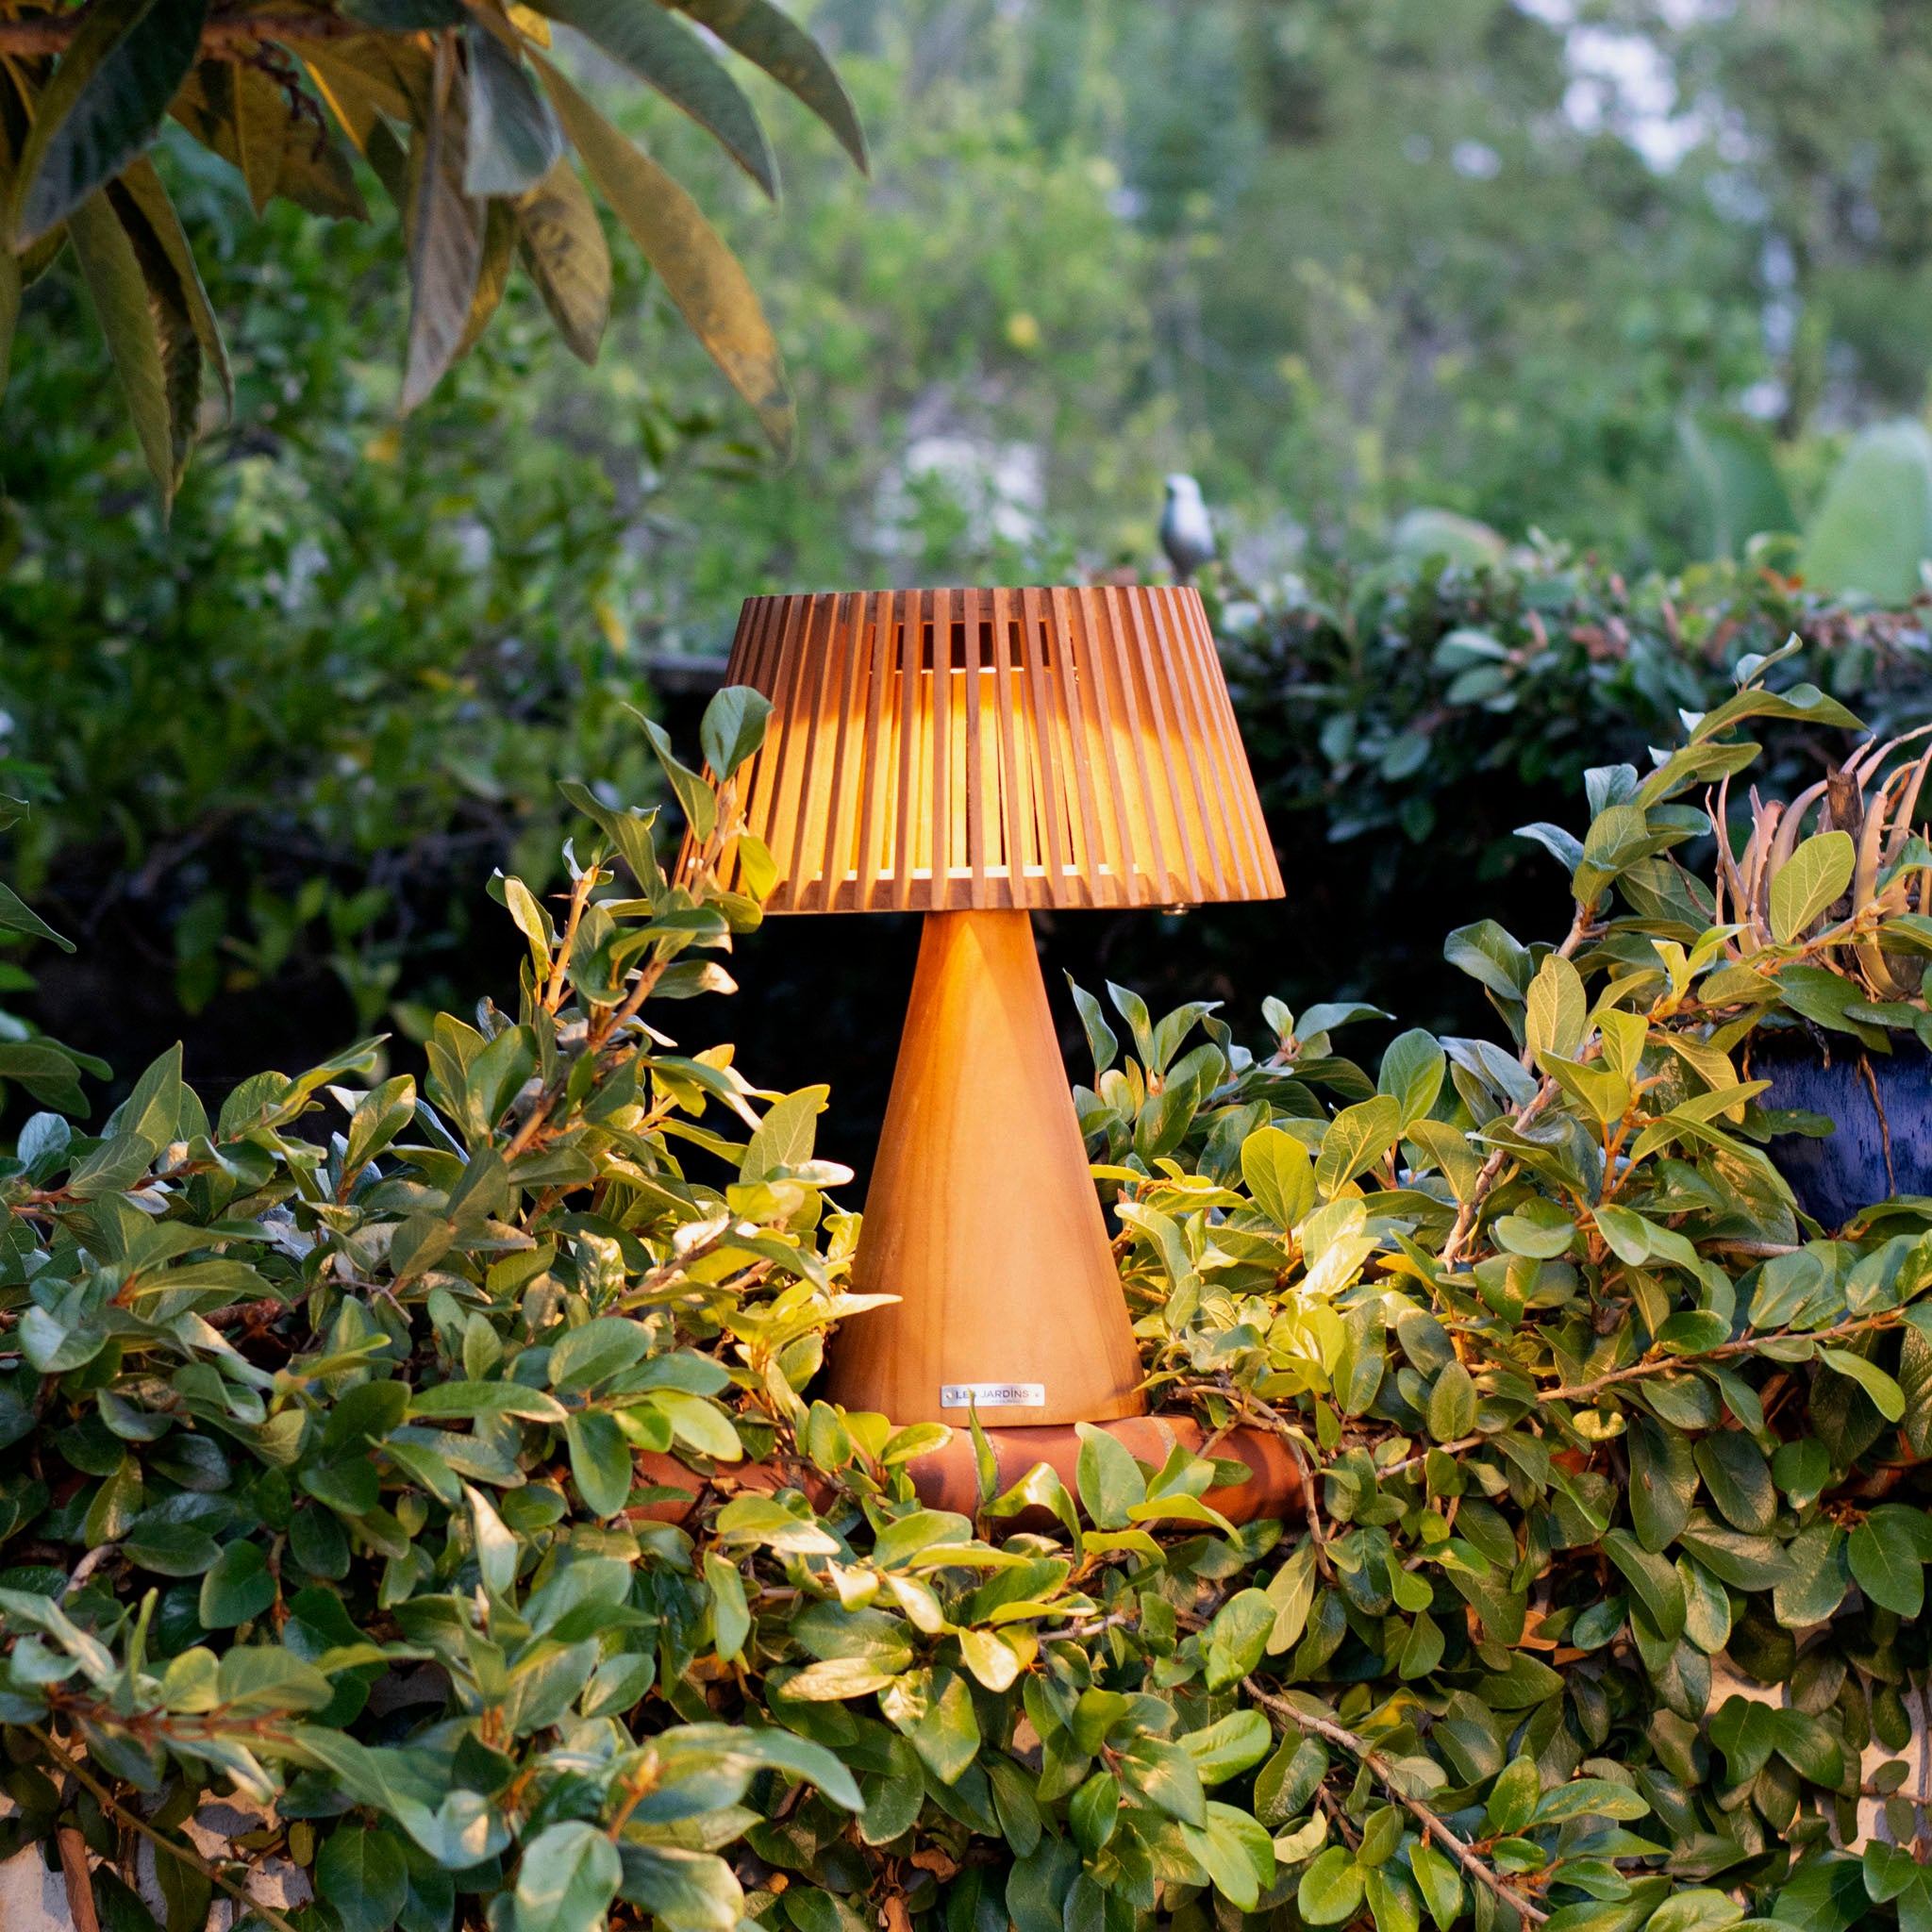 enoki table lamp on fence lighting up surrounding plants